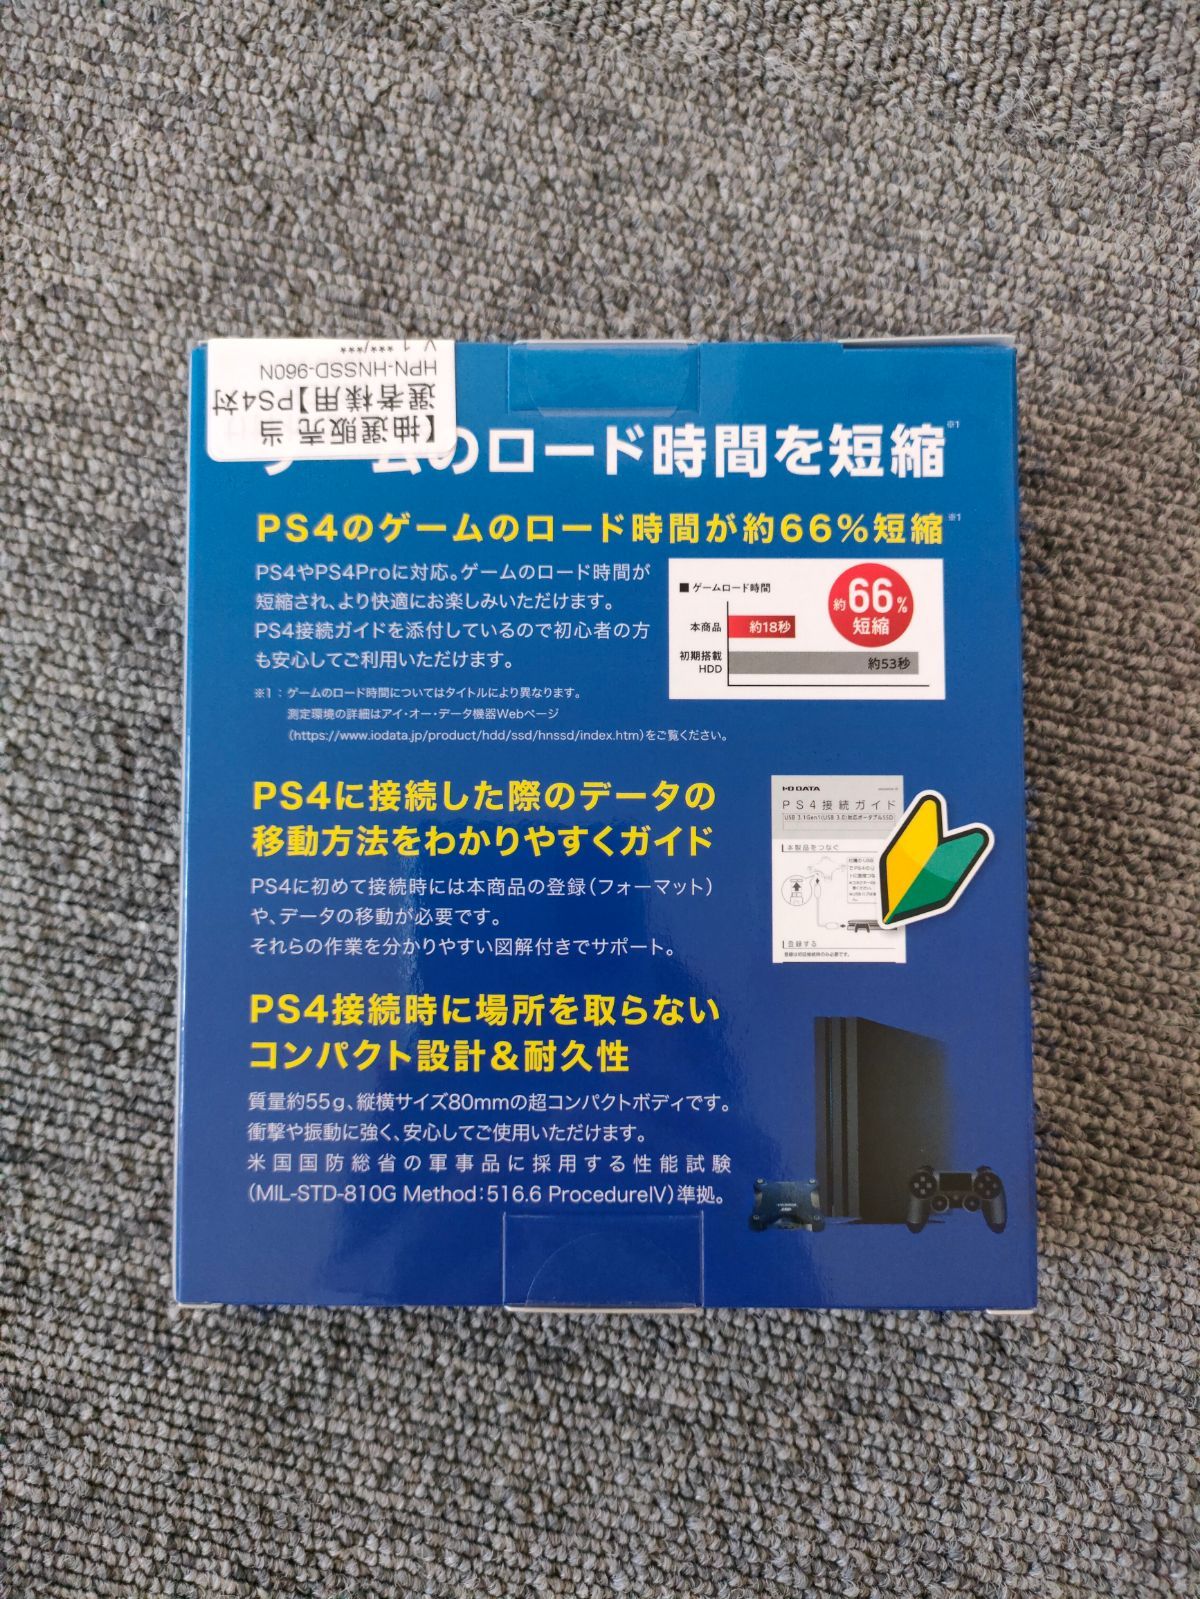 IODATA SSD 960GB HNSSD-960NV PS5 PS4 対応 - PC周辺機器